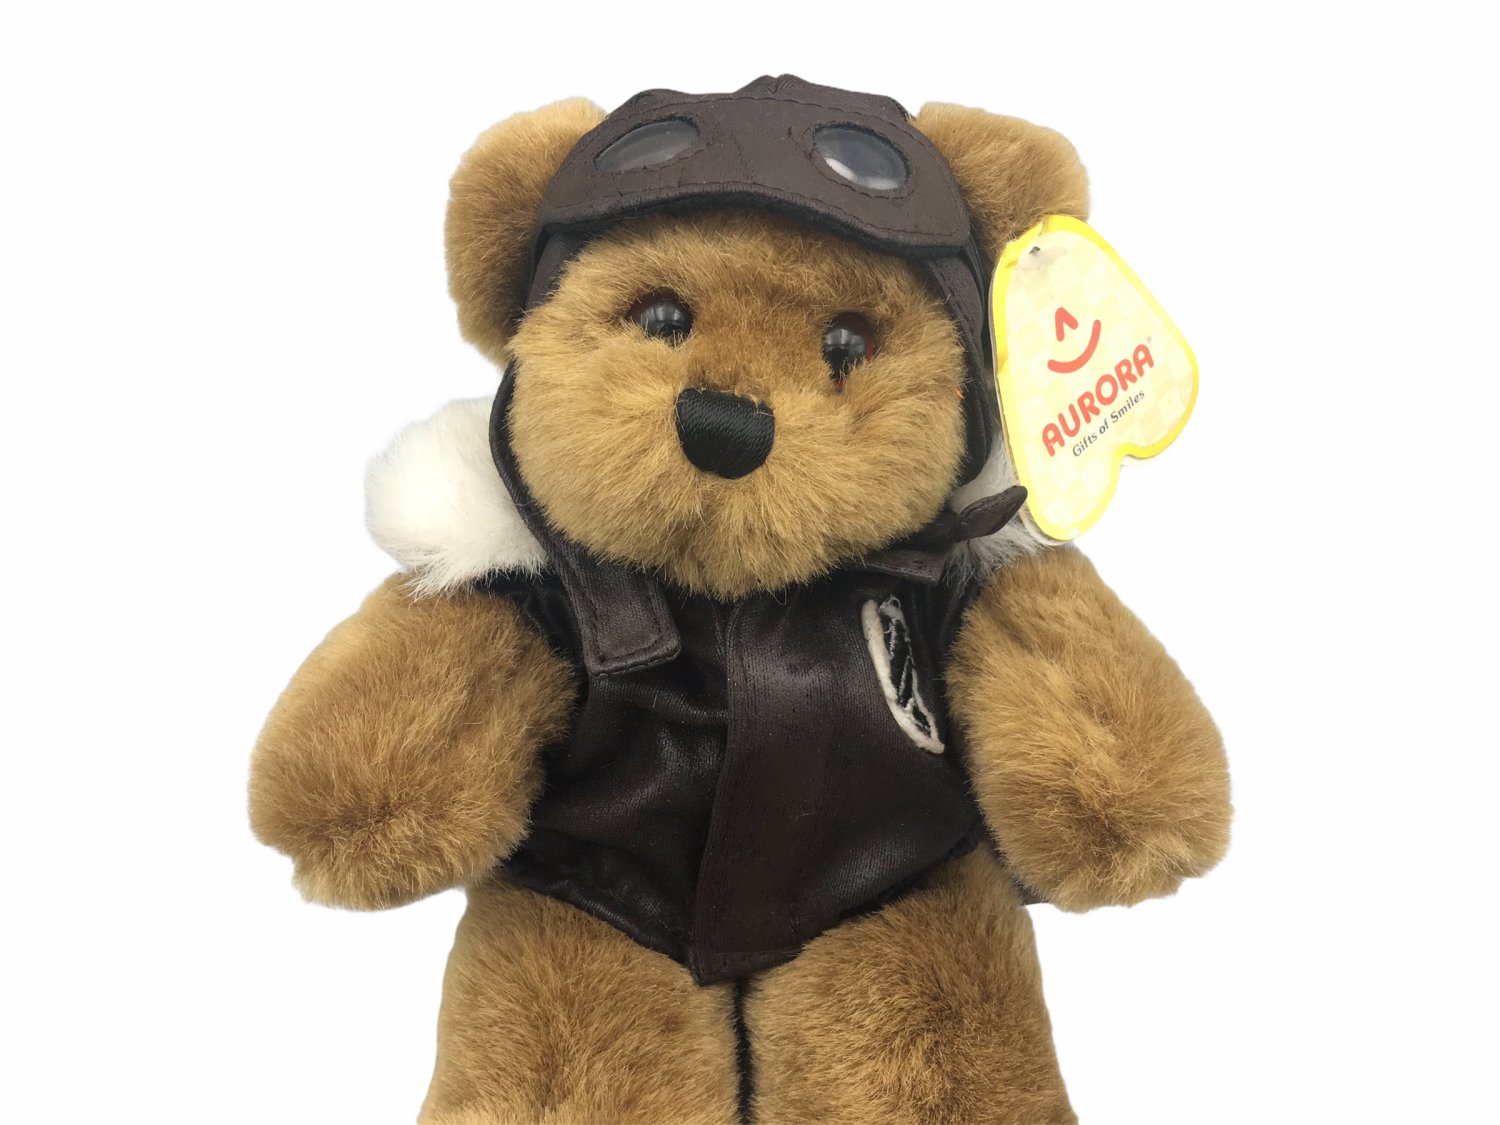 AURORA World Aviator Airplane Pilot 9" Plush Bear Toy Stuffed Animal